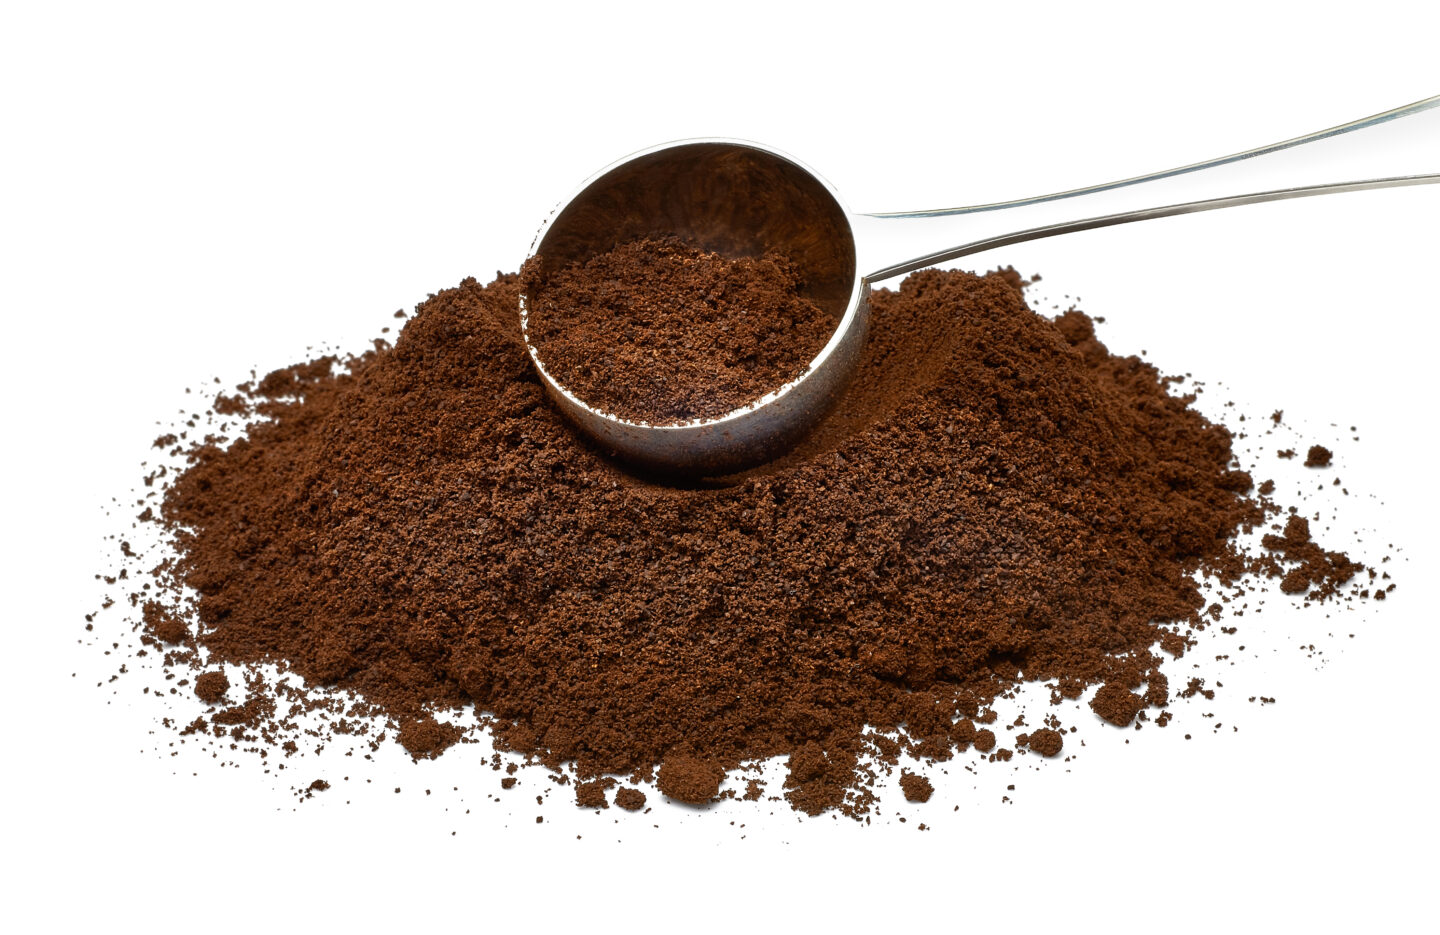 a-spoon-measuring-coffee-powder